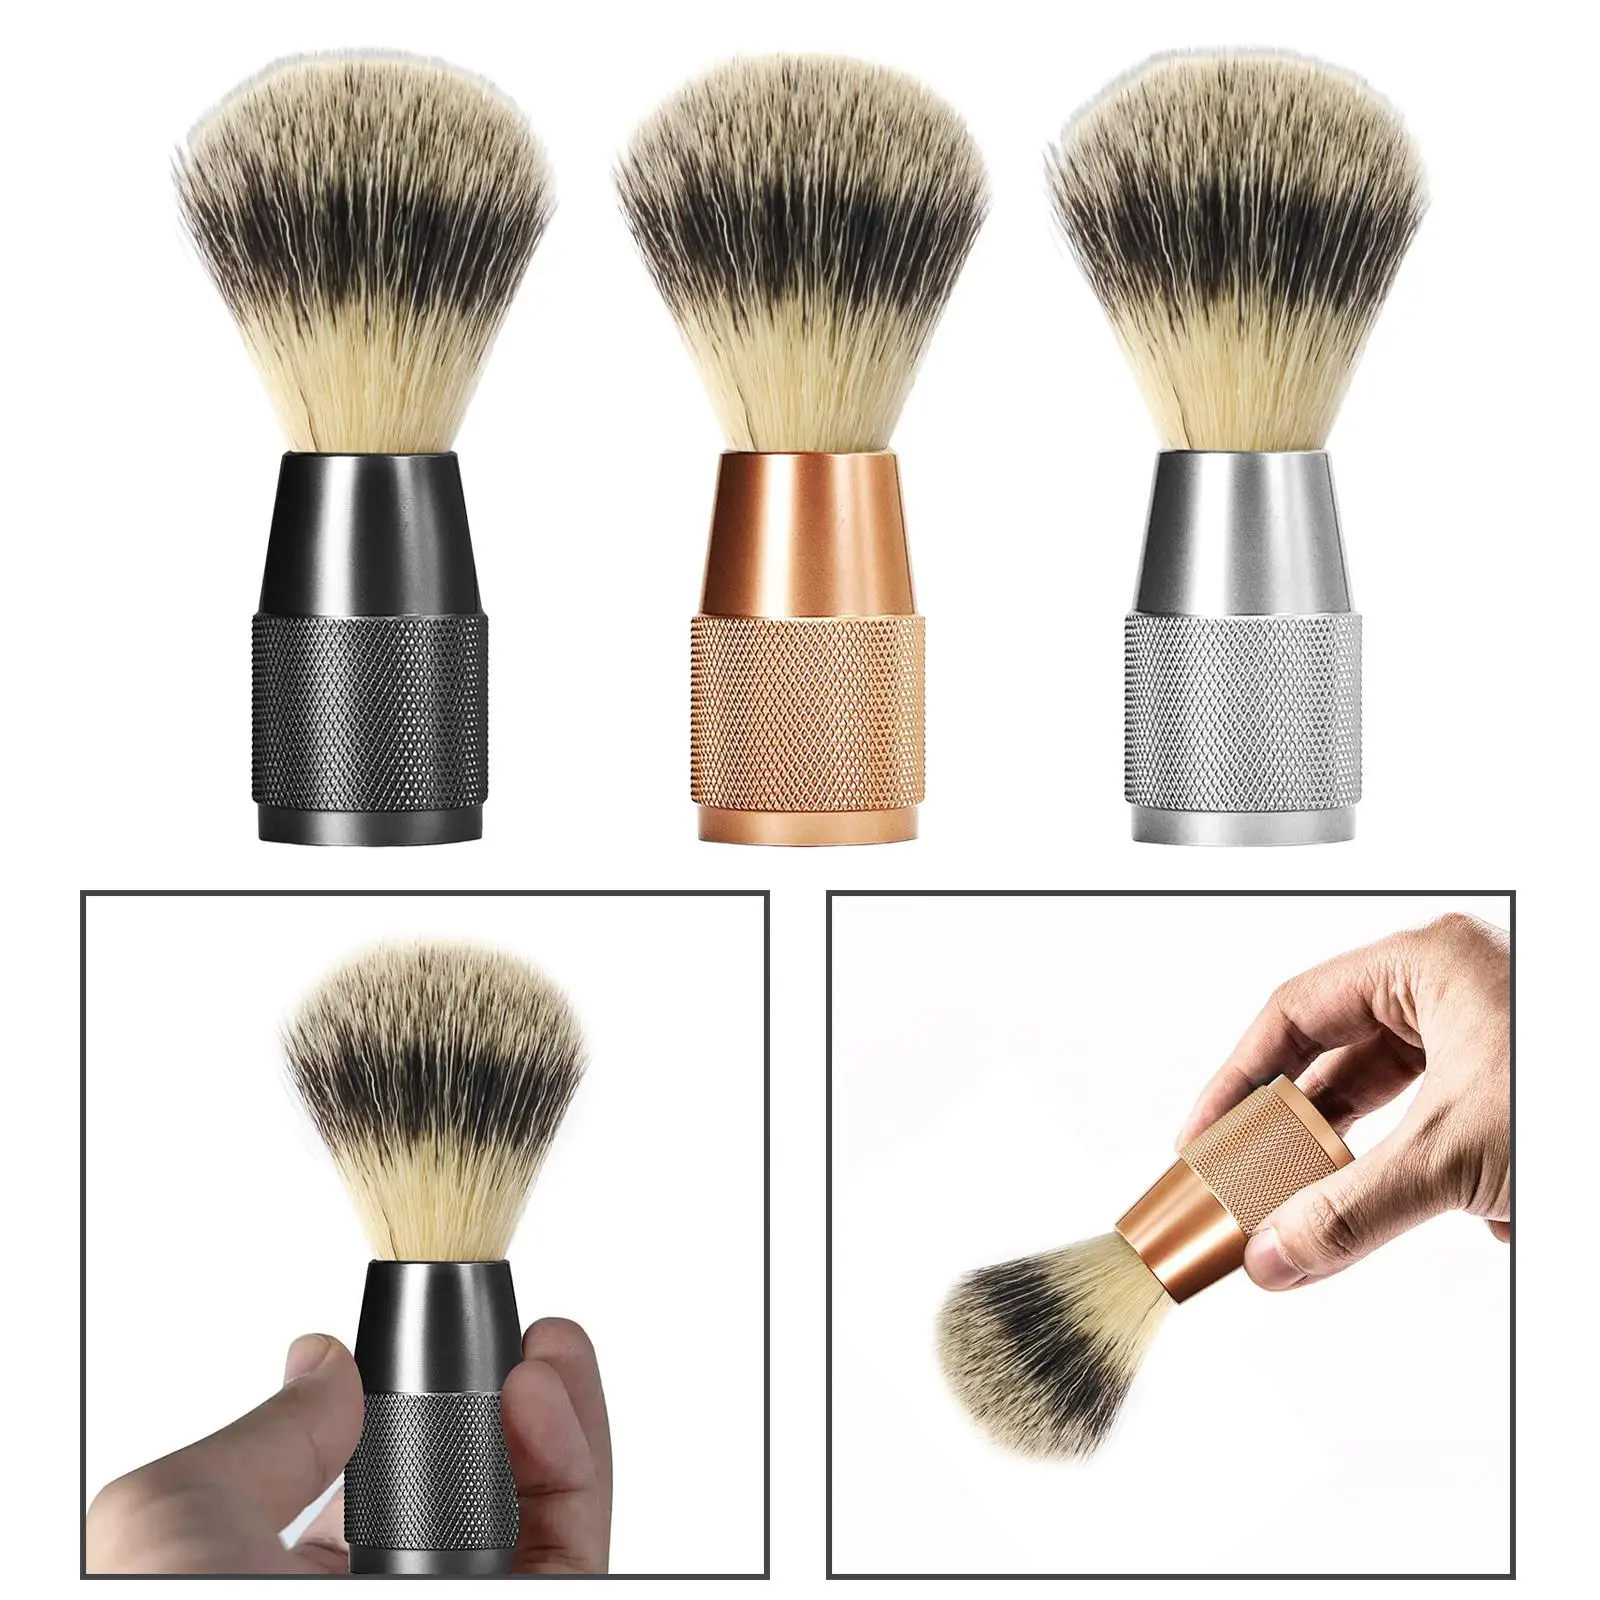 Hair Shaving Brush Nylon Bristles Shaving Accessory Durable Gentle Exfoliation Birthday Gift Length 4.3inch Tool Face Cleaning